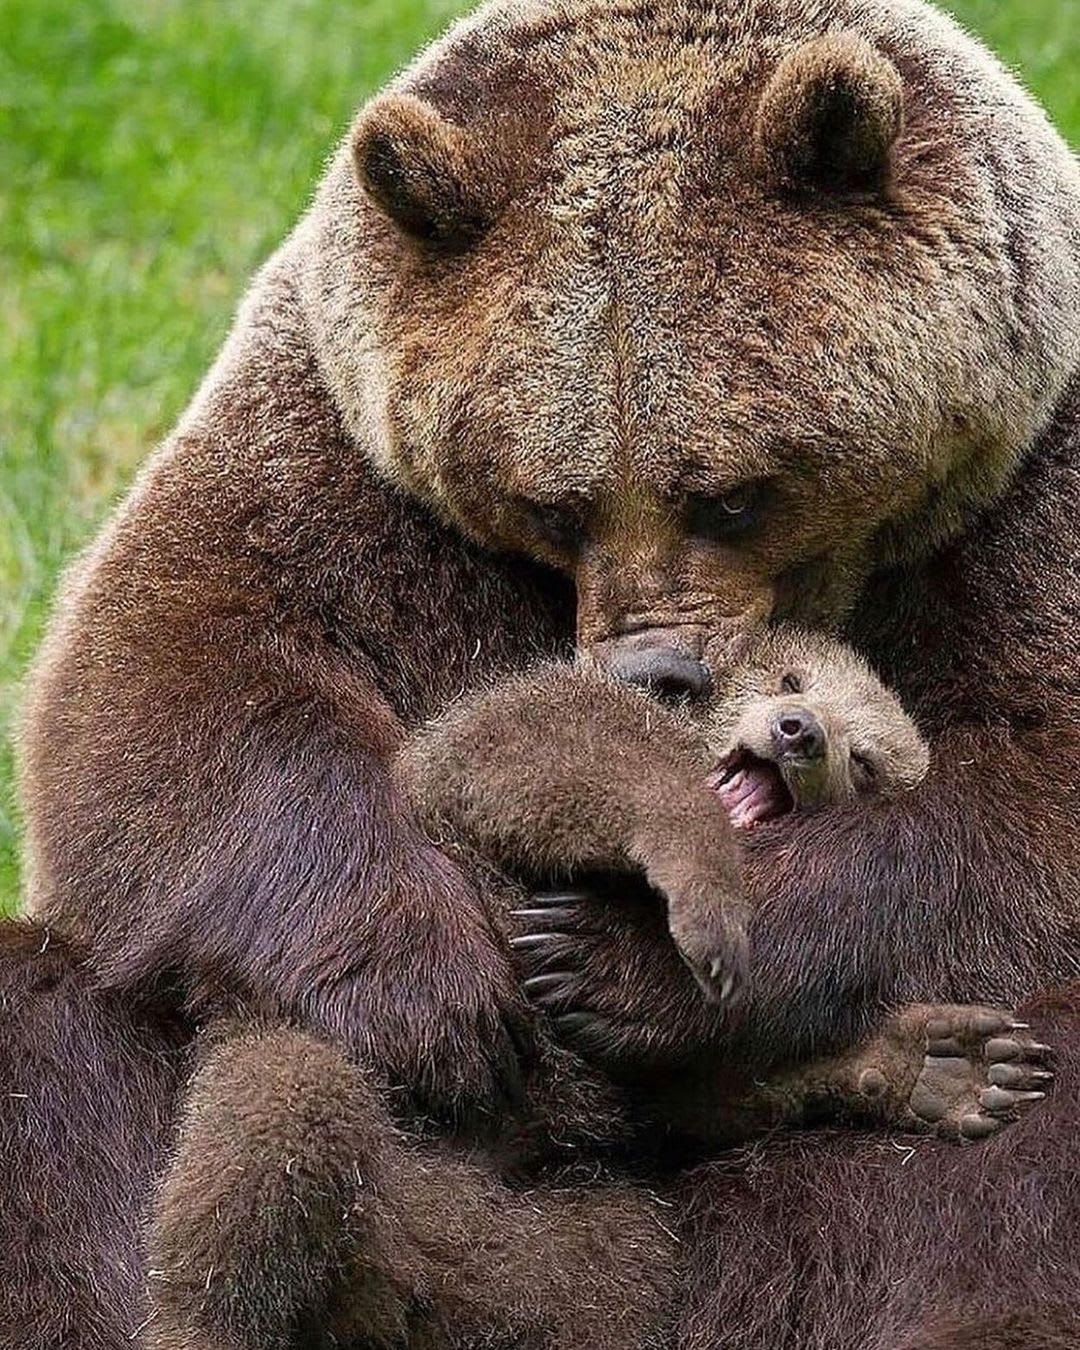 Mama bear hugs are the best